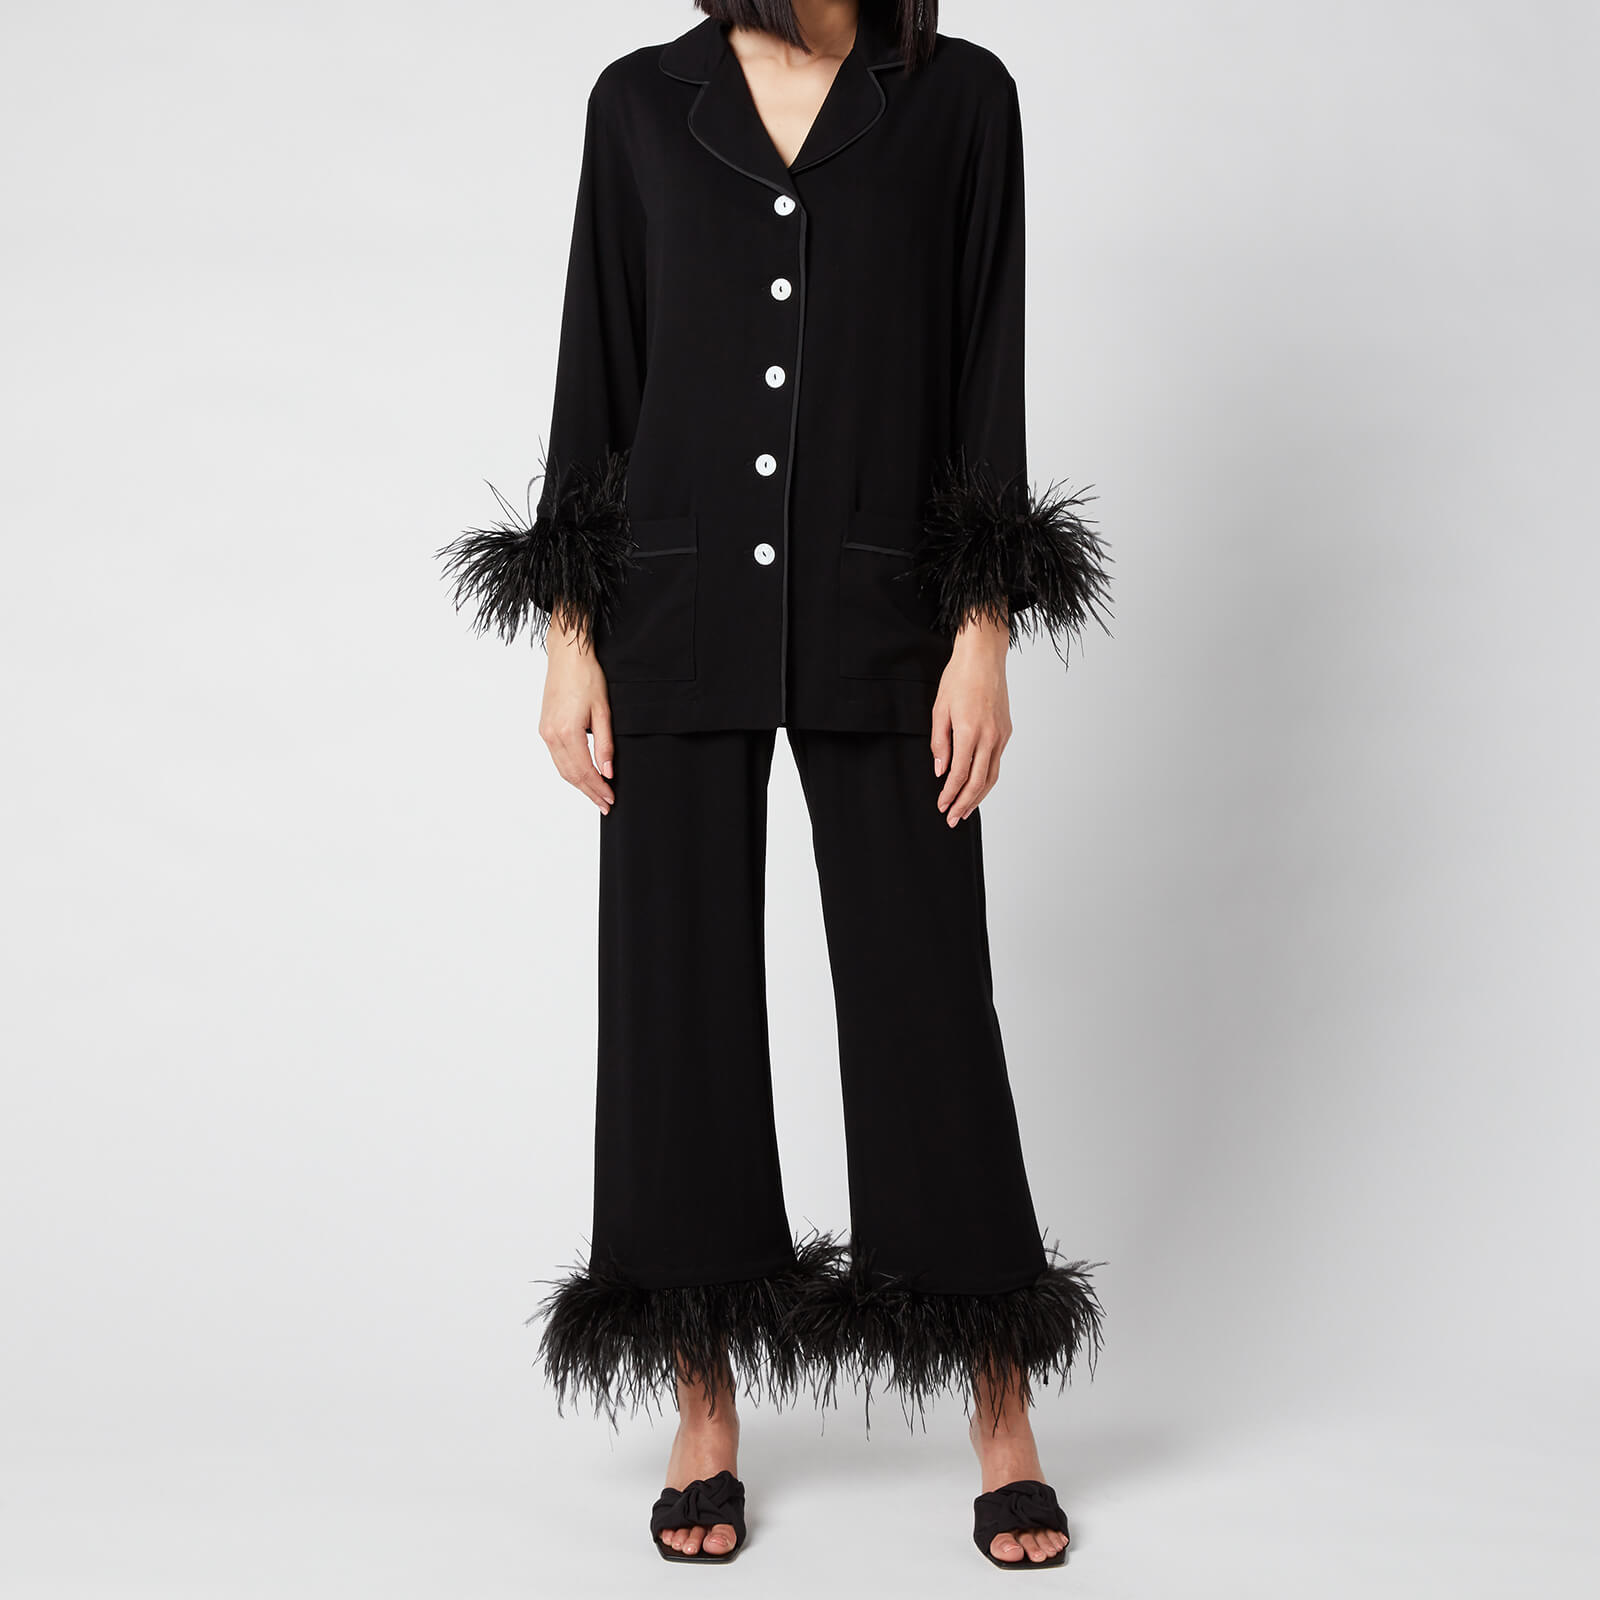 Sleeper Women's Party Pyjama Set with Double Feathers - Black - XS